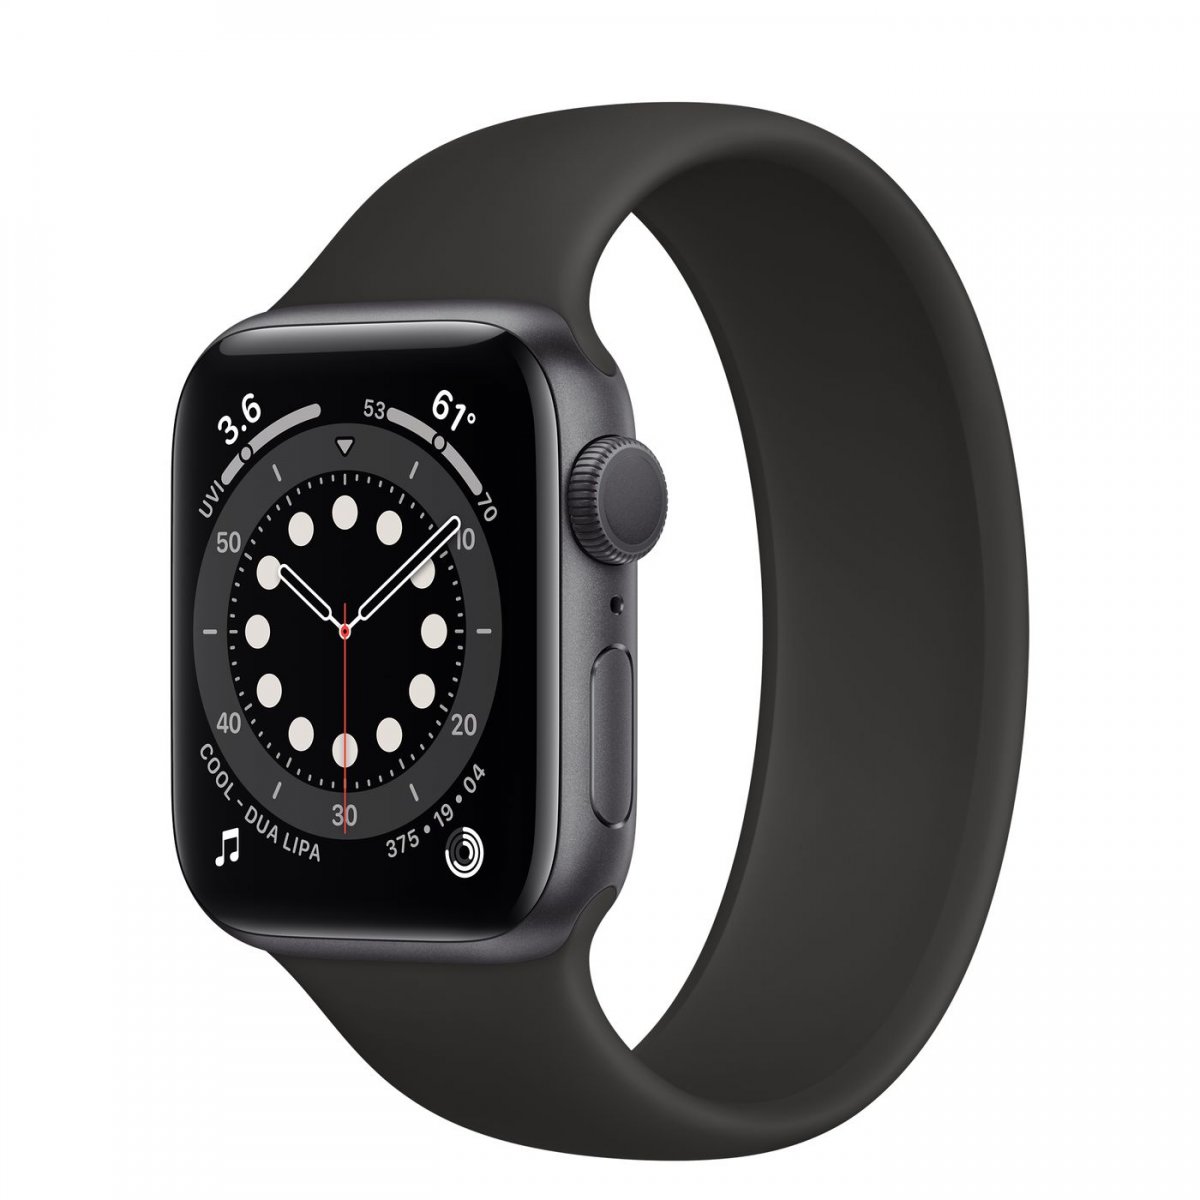 Řemínek iMore Solo Loop Apple Watch Series 1/2/3 38mm - Černá (XS)